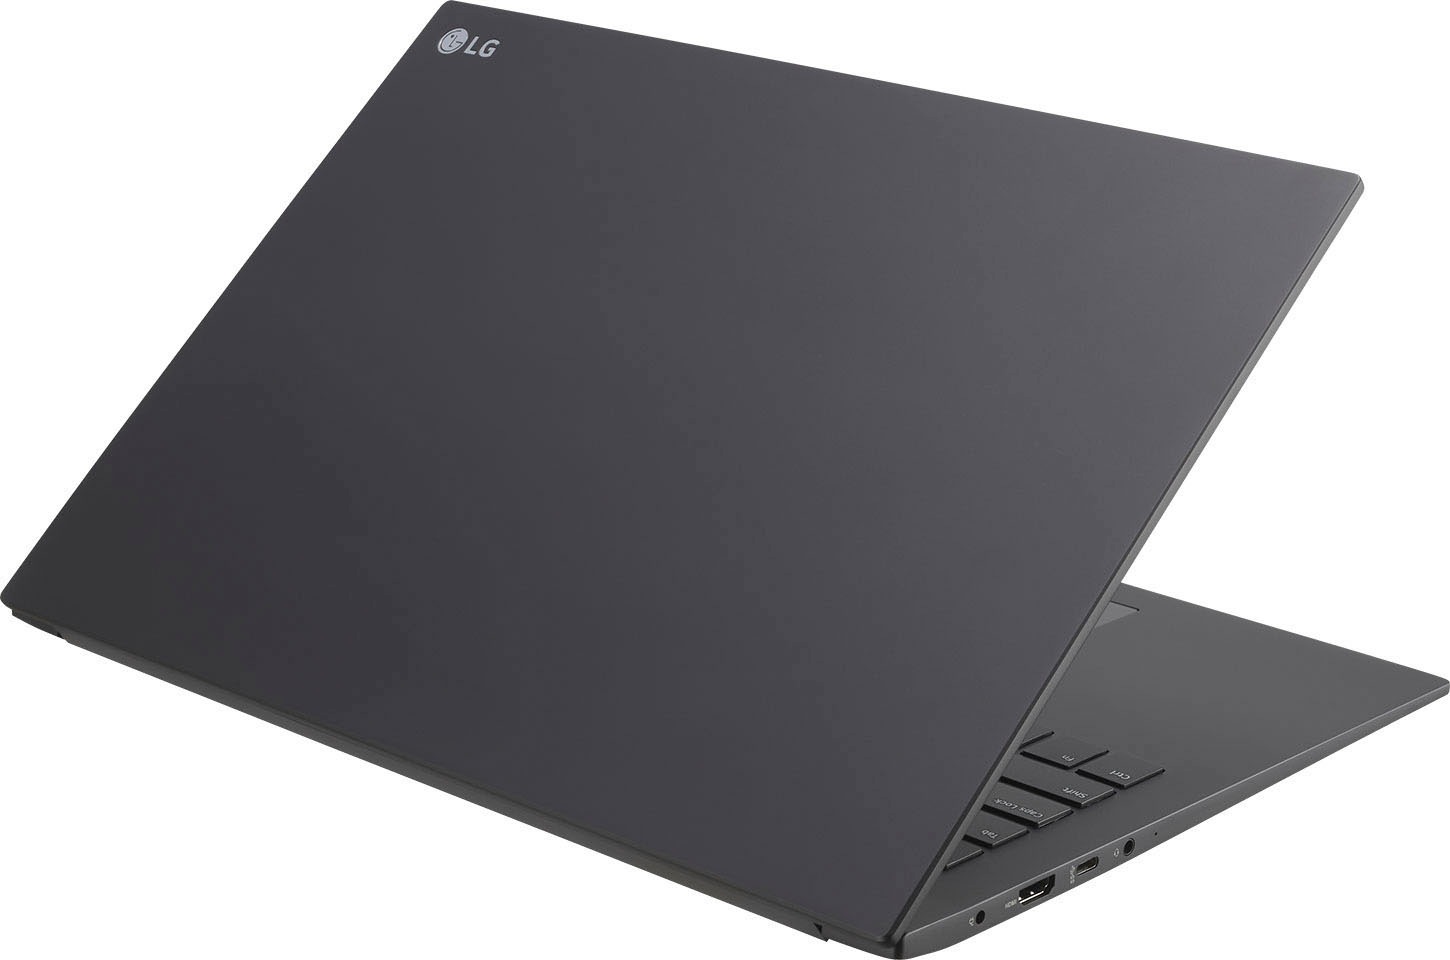 LG Business-Notebook »UltraPC 16" Laptop, Full HD+ IPS-Display, 16 GB RAM, Windows 11 Home,«, 40,6 cm, / 16 Zoll, AMD, Ryzen 5, Radeon Vega Graphics, 512 GB SSD